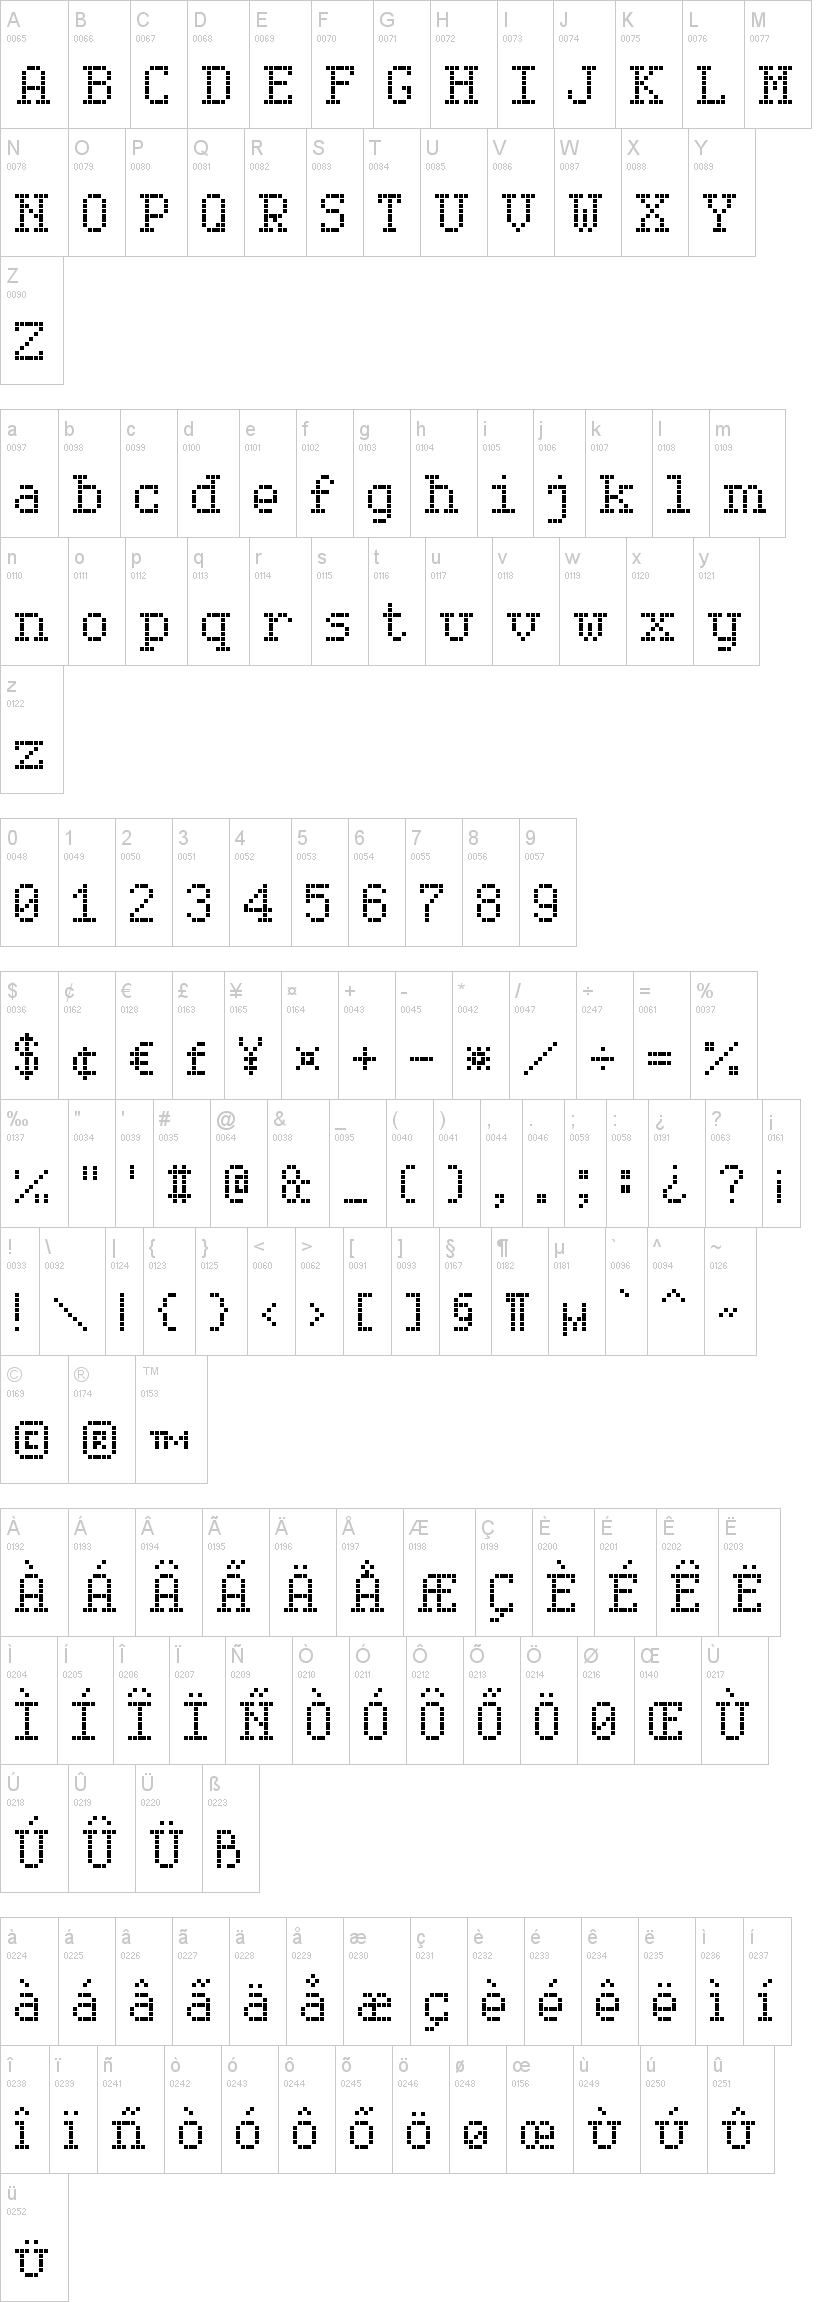 Serif LED Board-7字符映射图